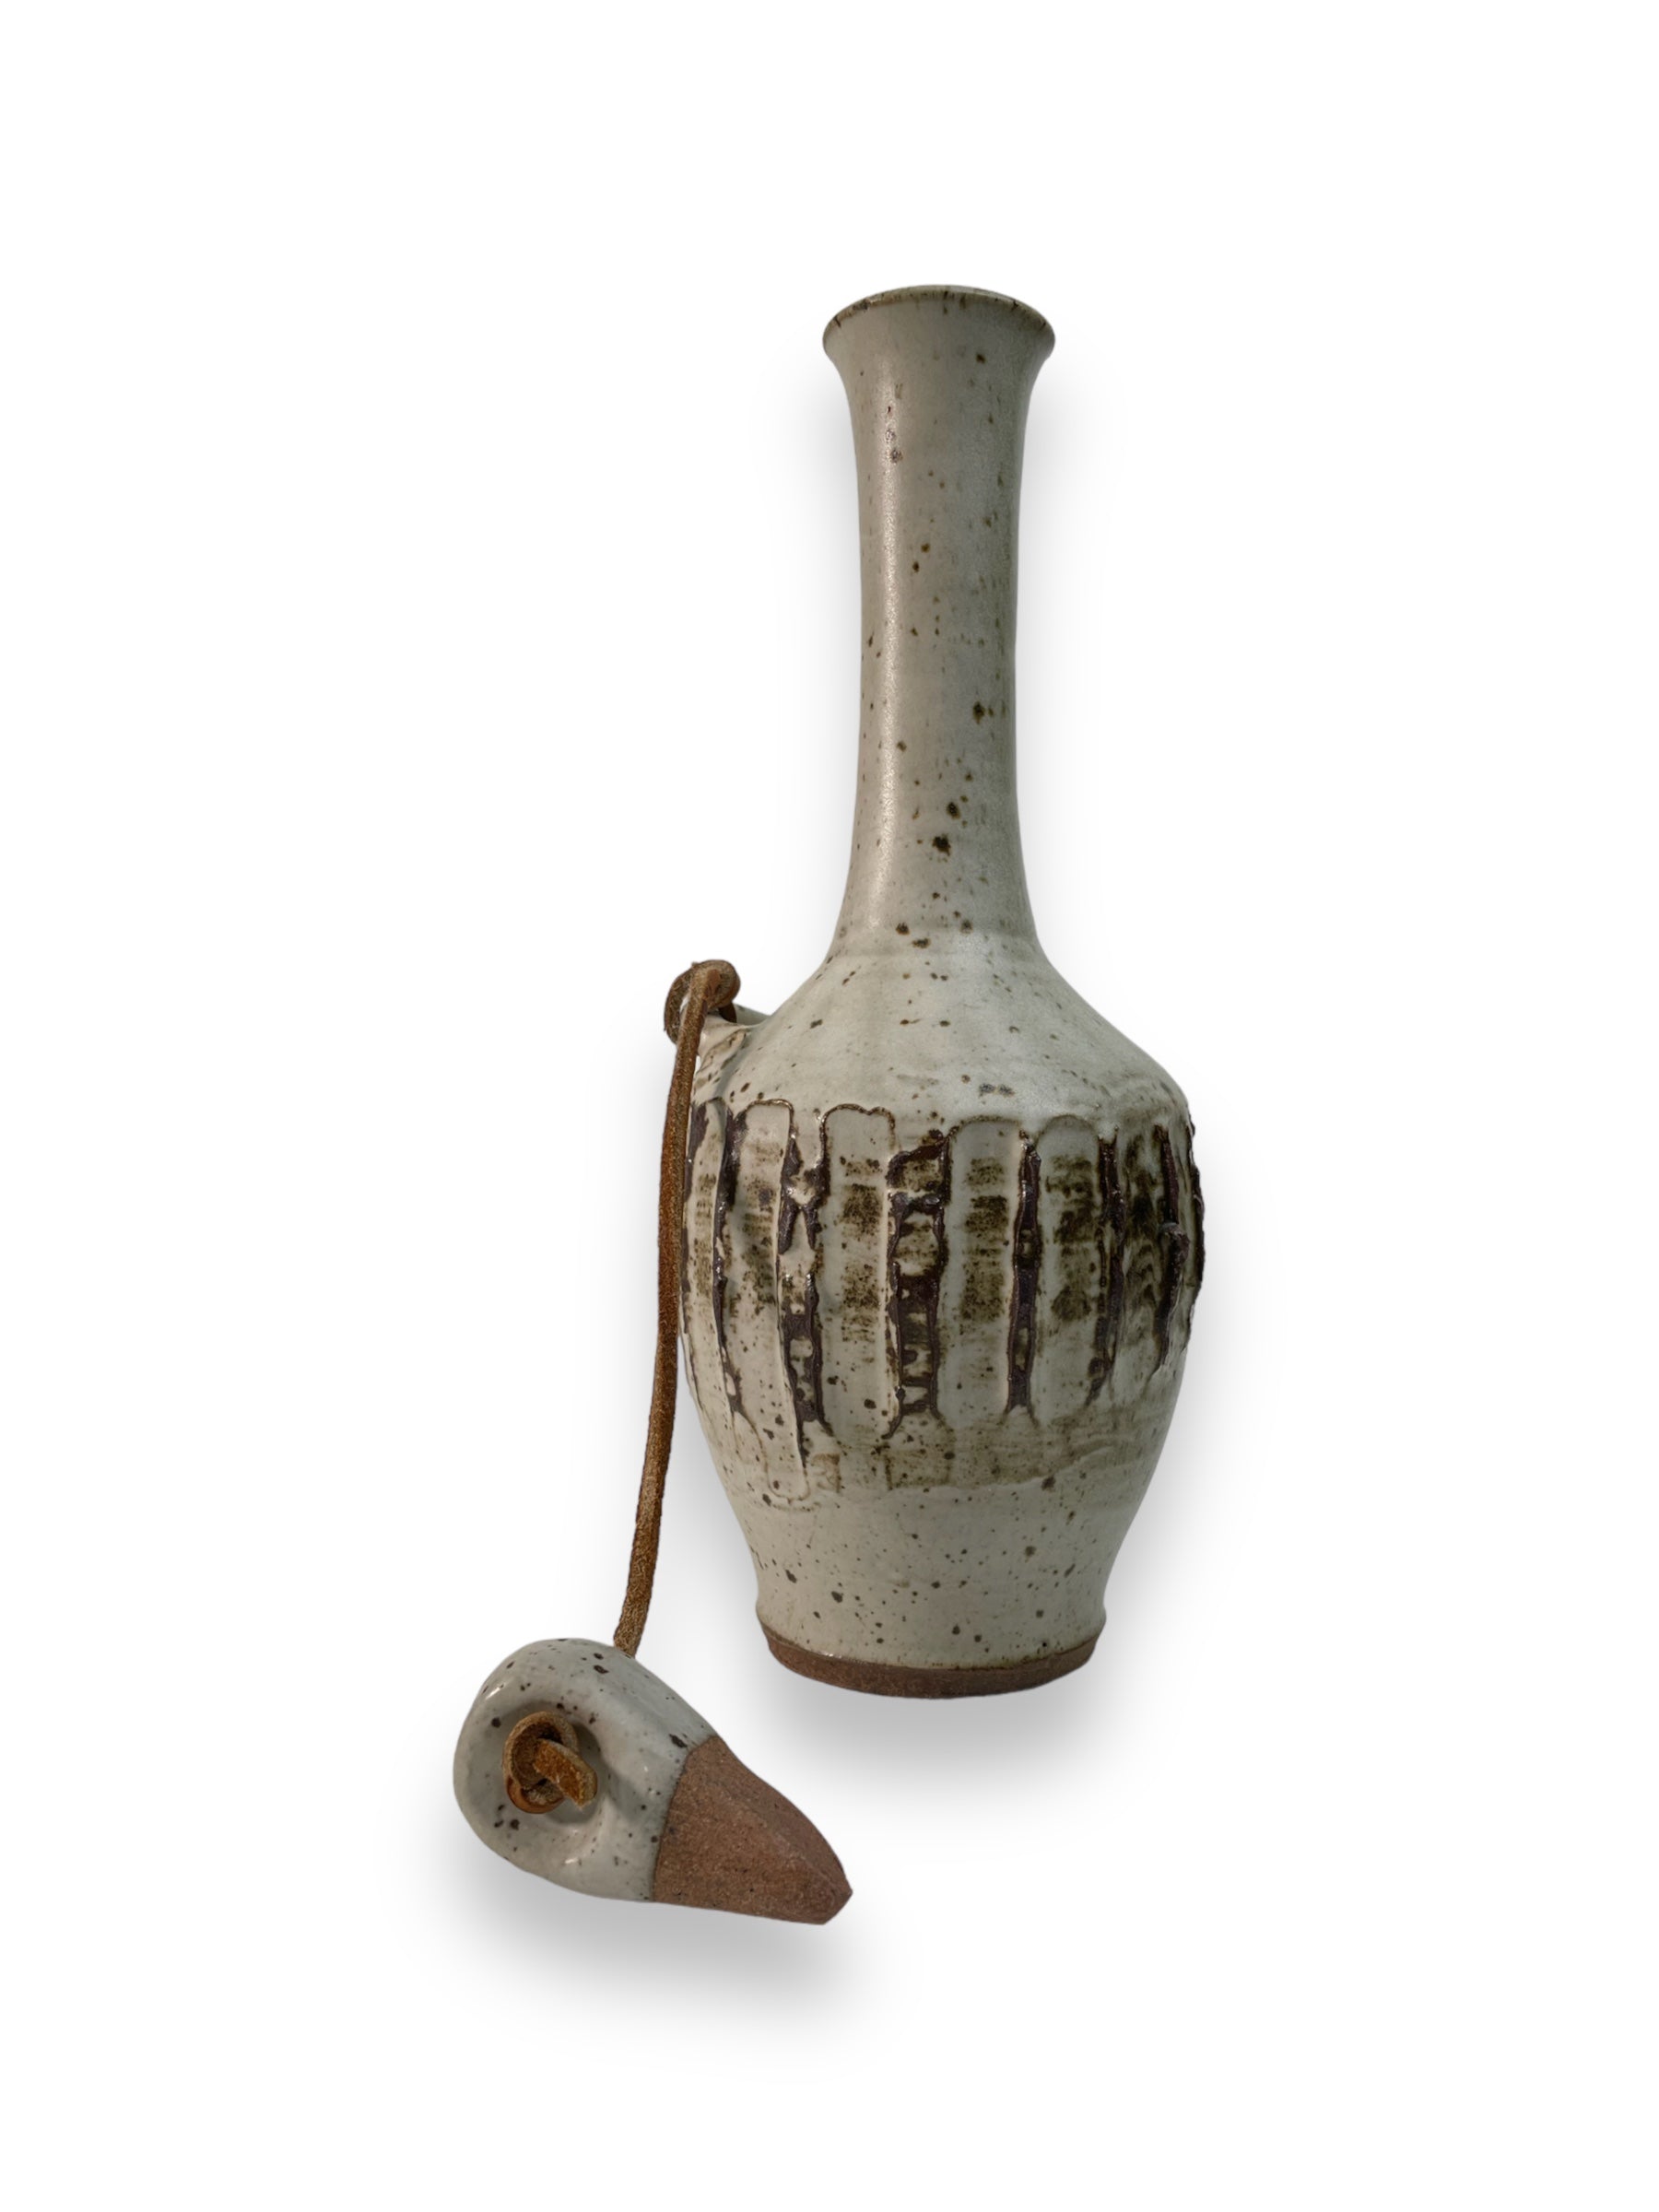 Pottery Vase made in Quebec